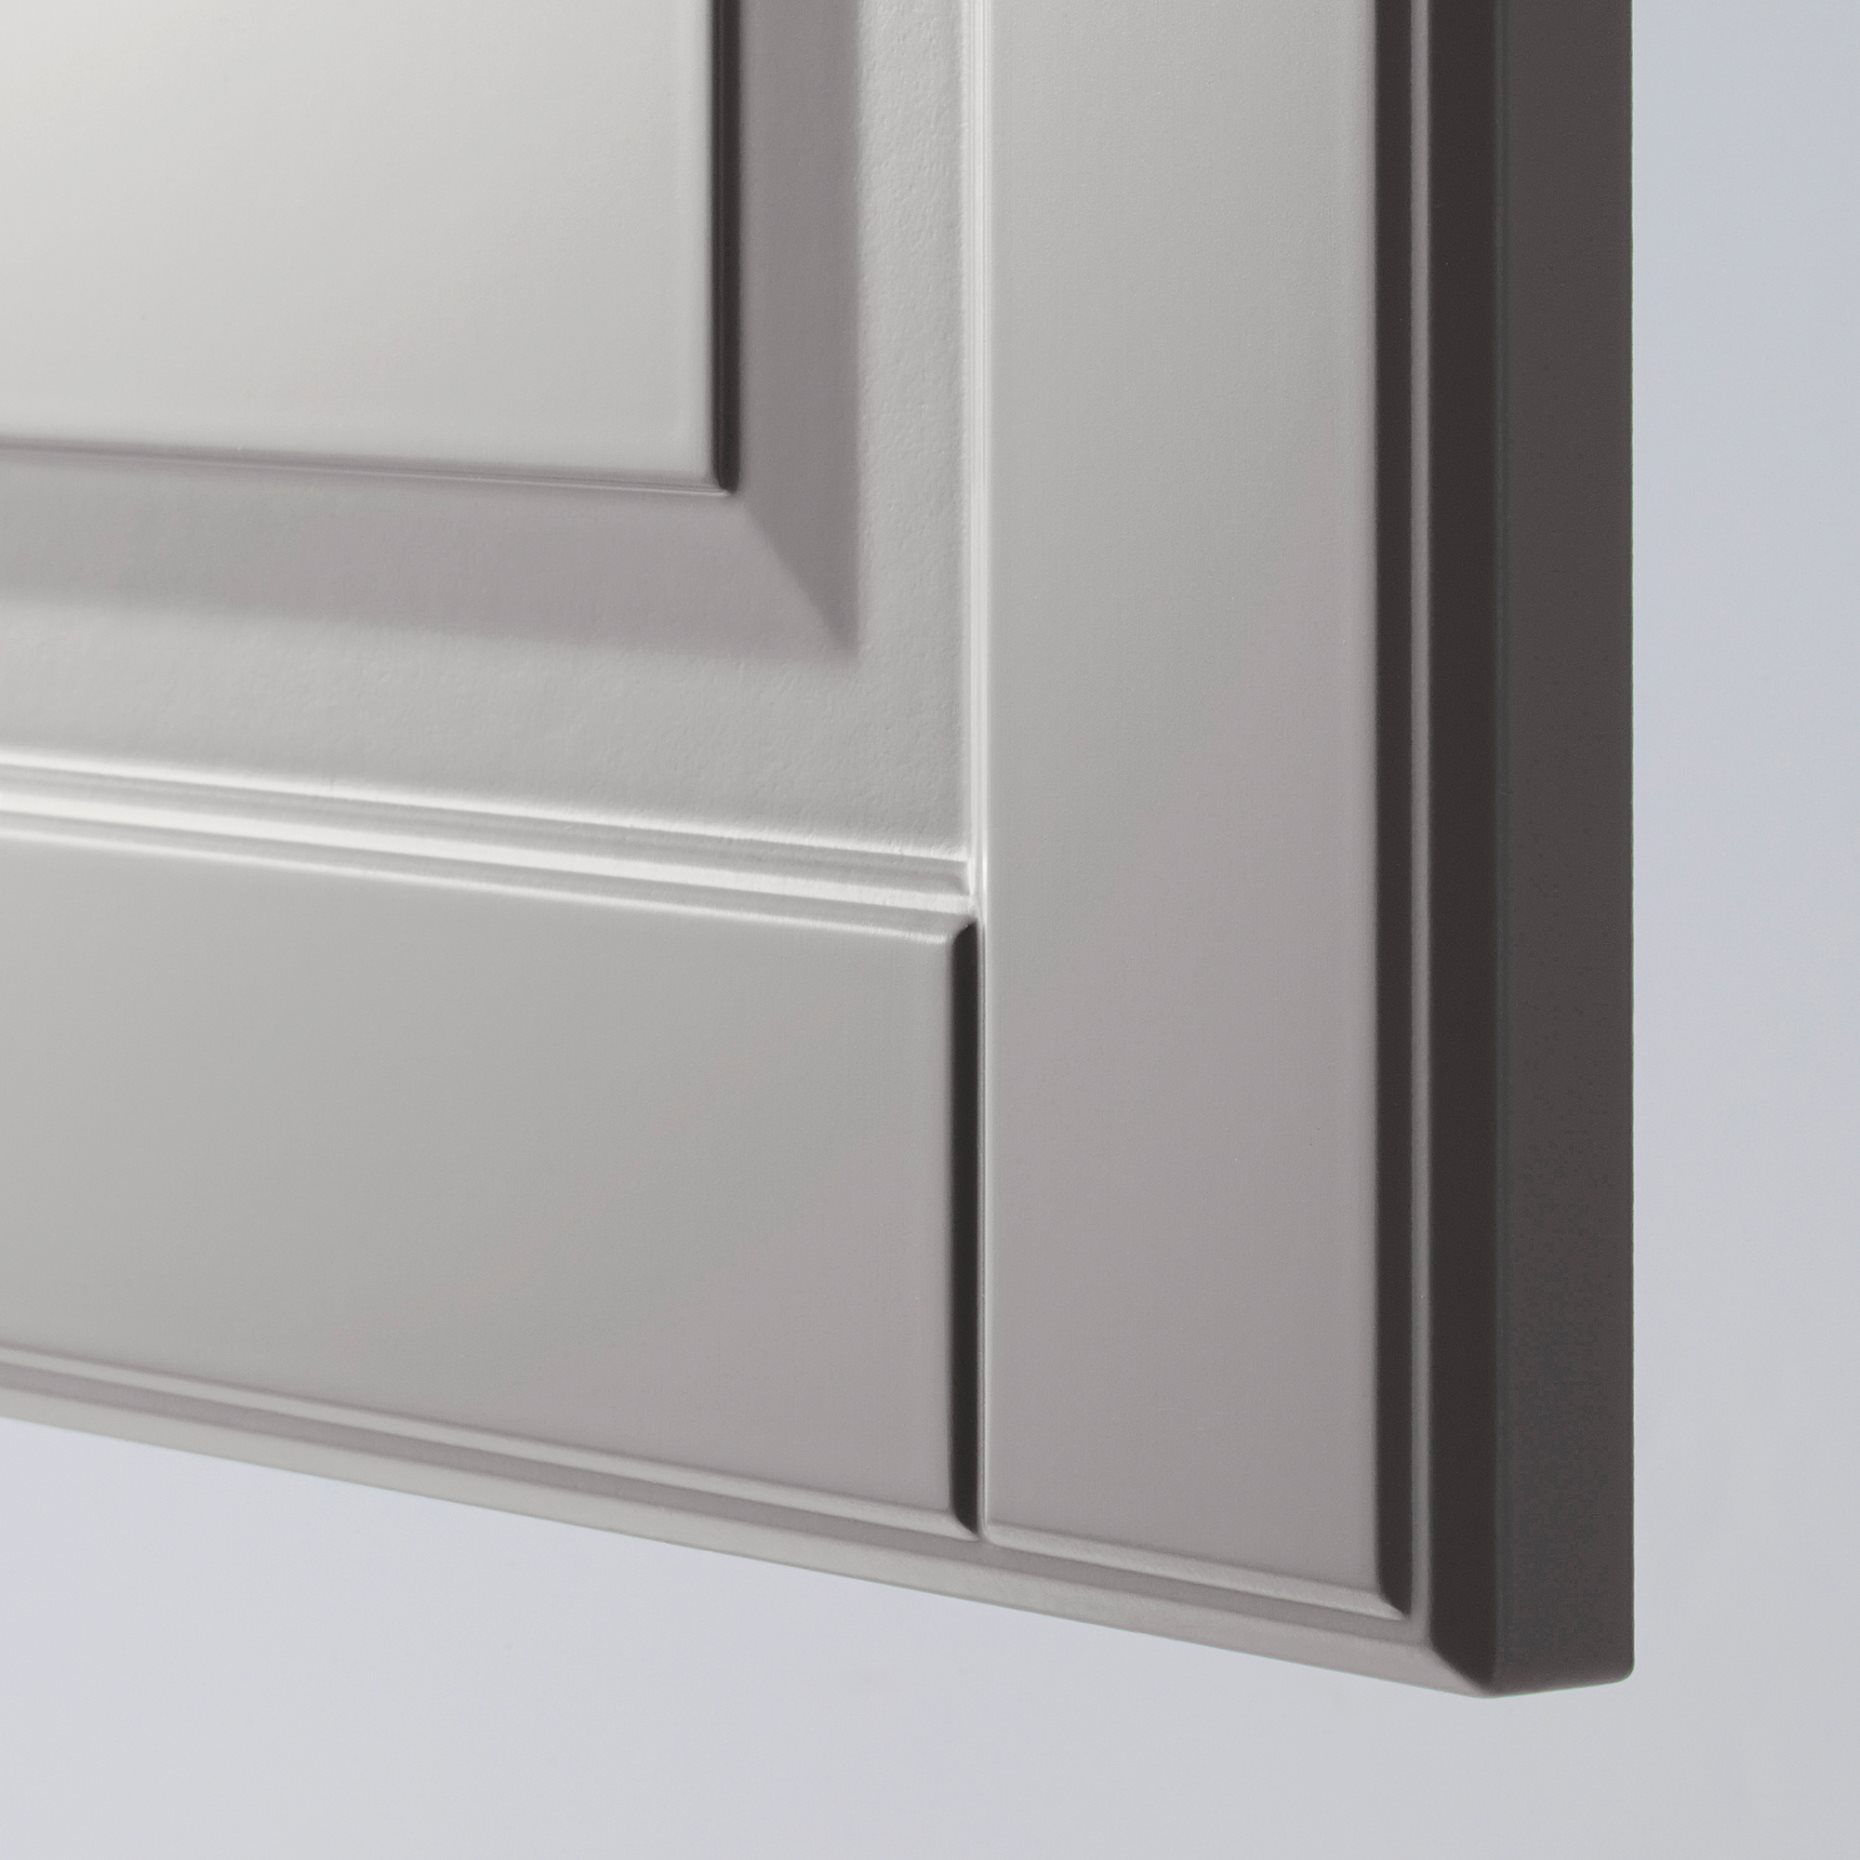 METOD, corner base cabinet with shelf, 128x68 cm, 494.673.94